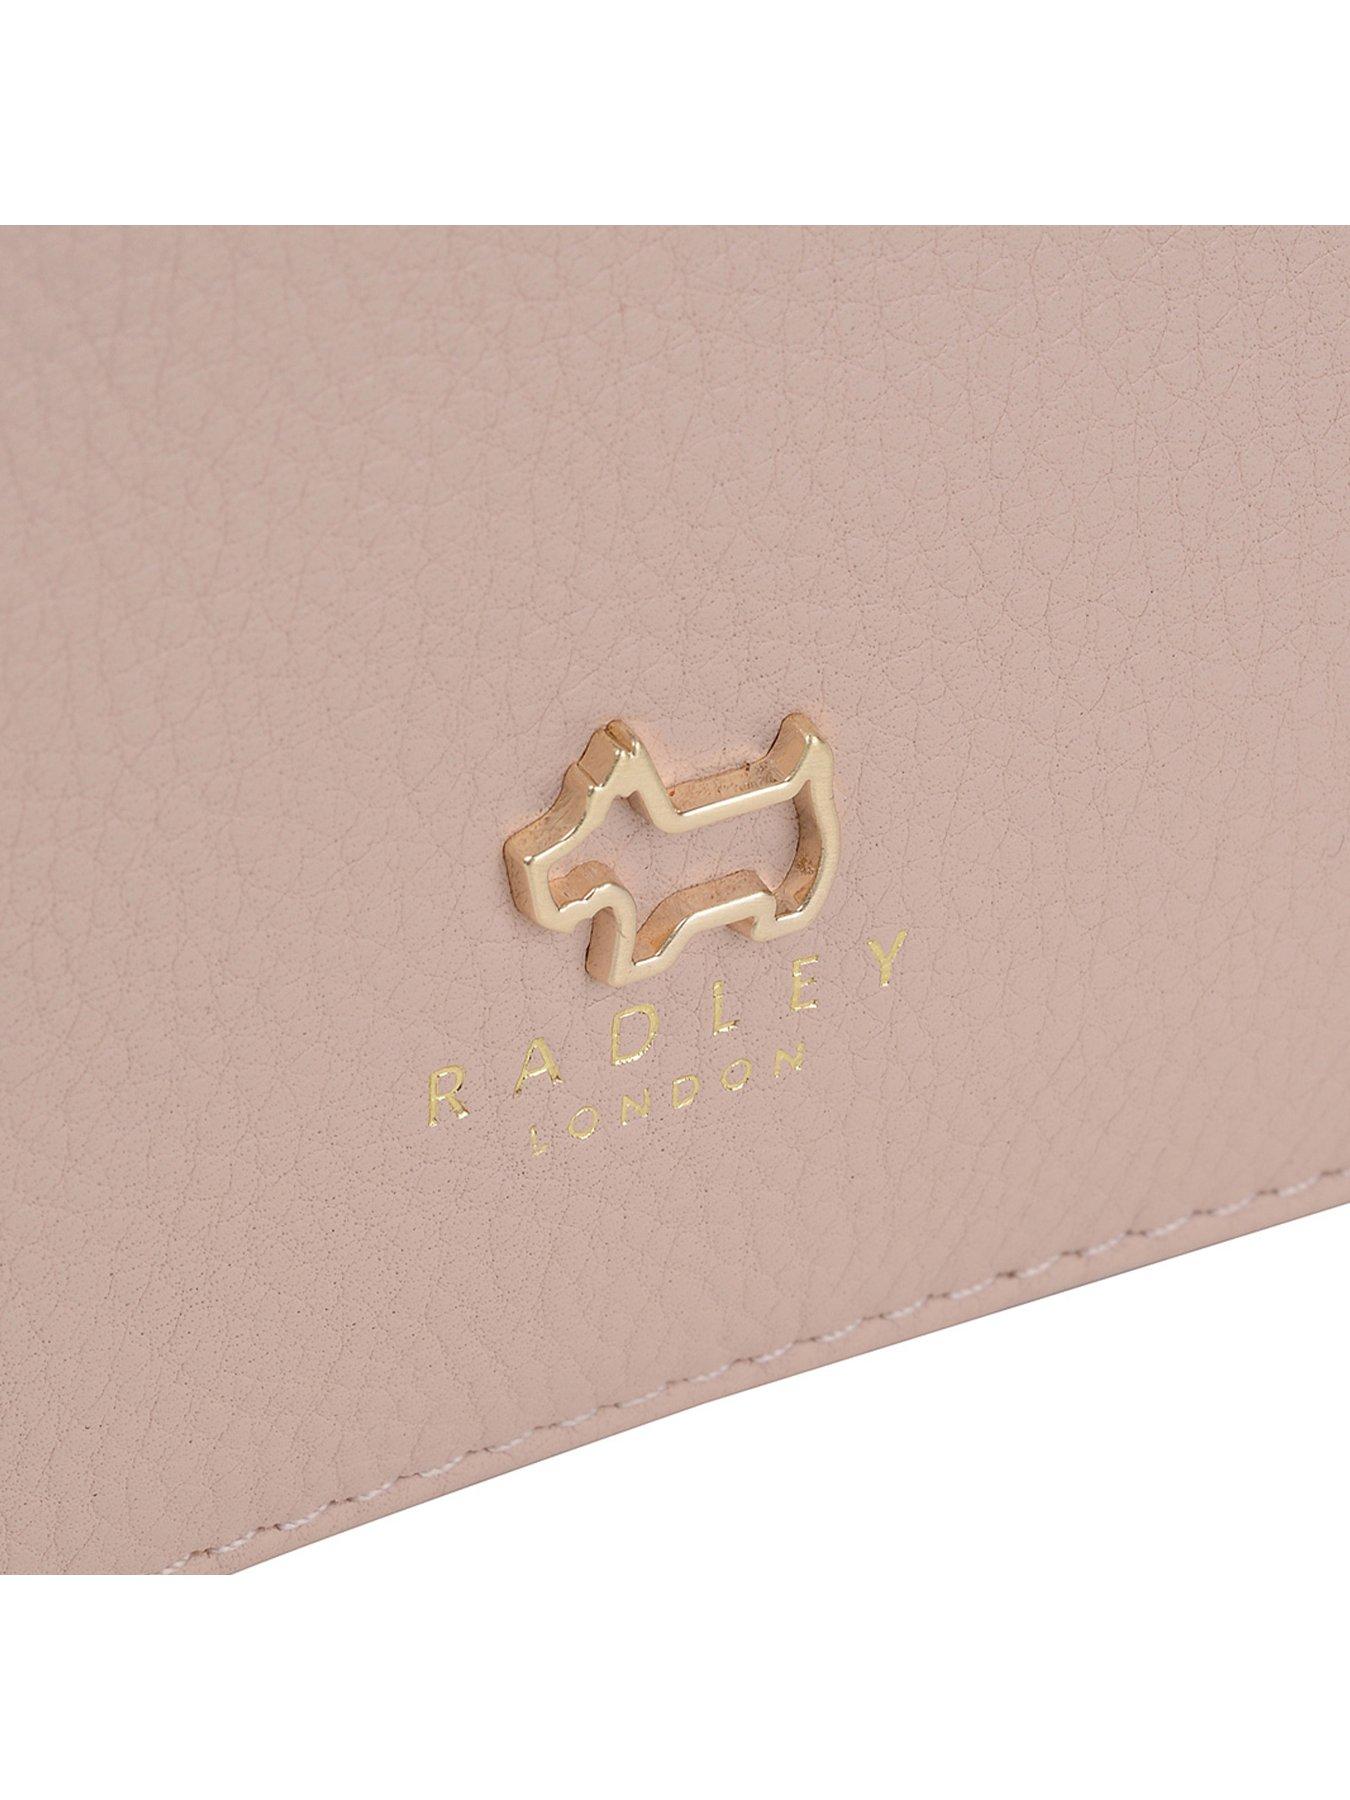 Bags & Purses Pockets Leather Medium Zip Around Crossbody Bag - Prairie Pink